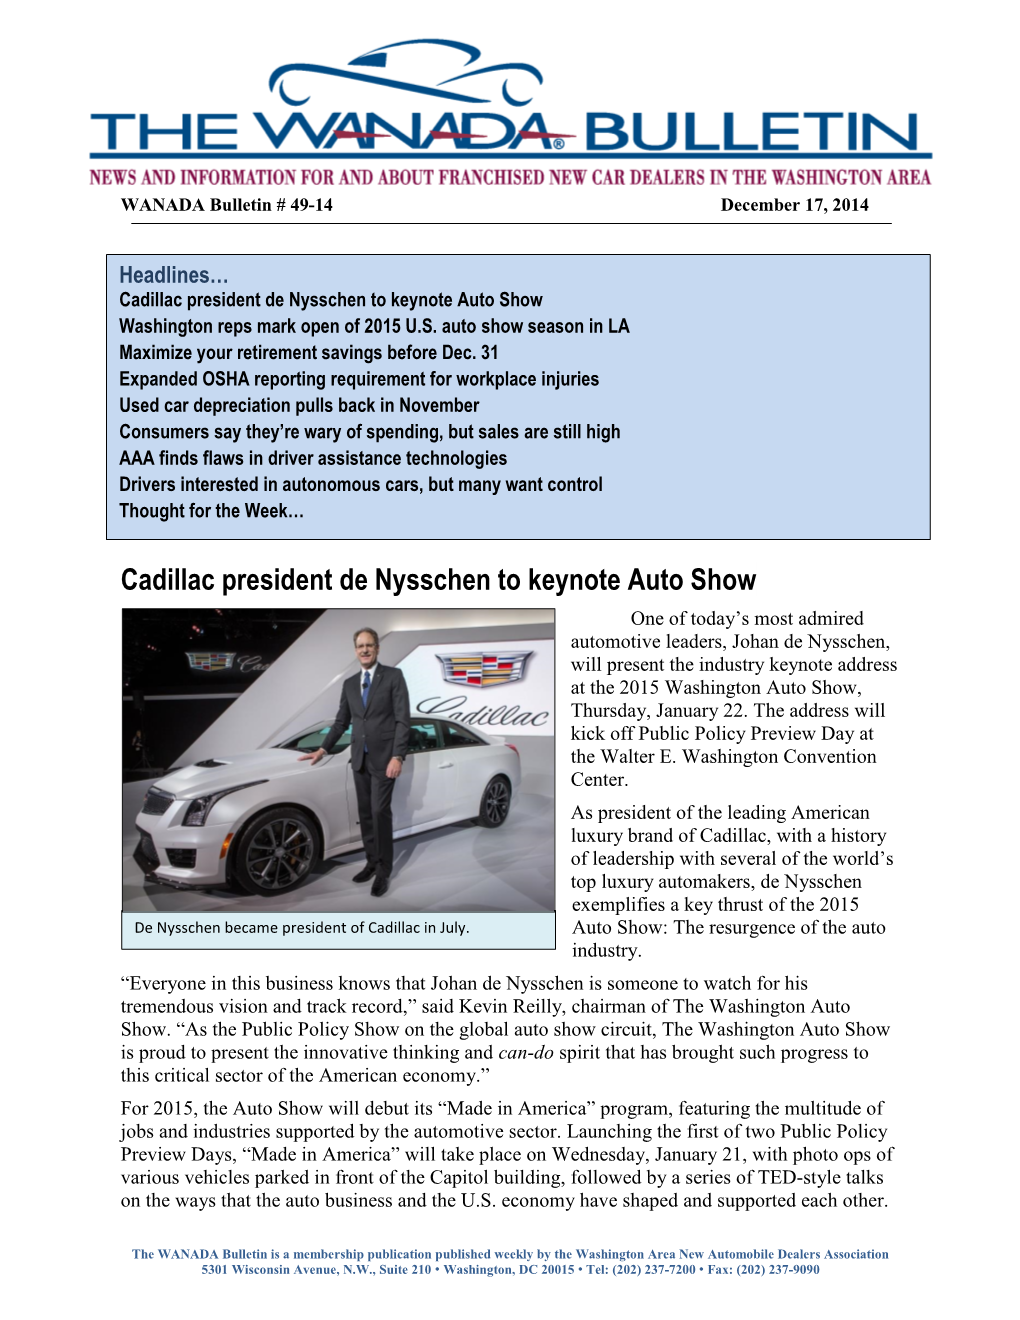 Cadillac President De Nysschen to Keynote Auto Show Washington Reps Mark Open of 2015 U.S